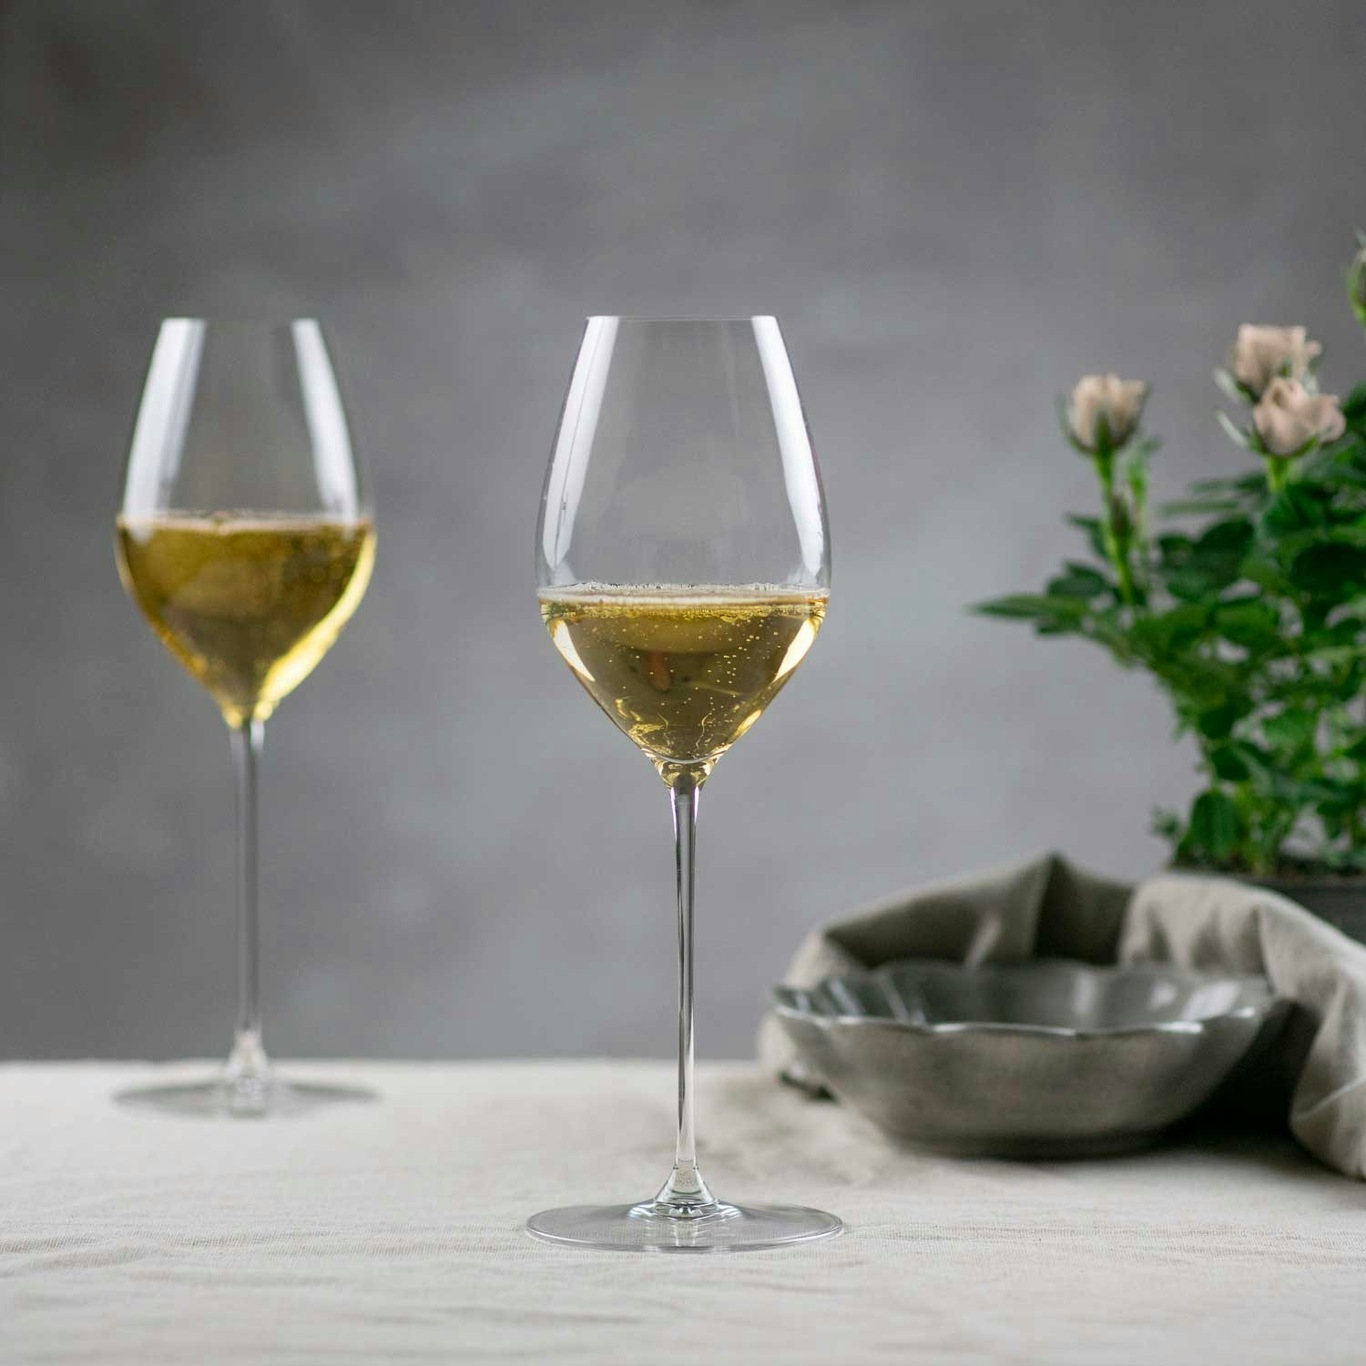 https://royaldesign.com/image/11/riedel-superleggero-champagne-glass-46-cl-0?w=800&quality=80